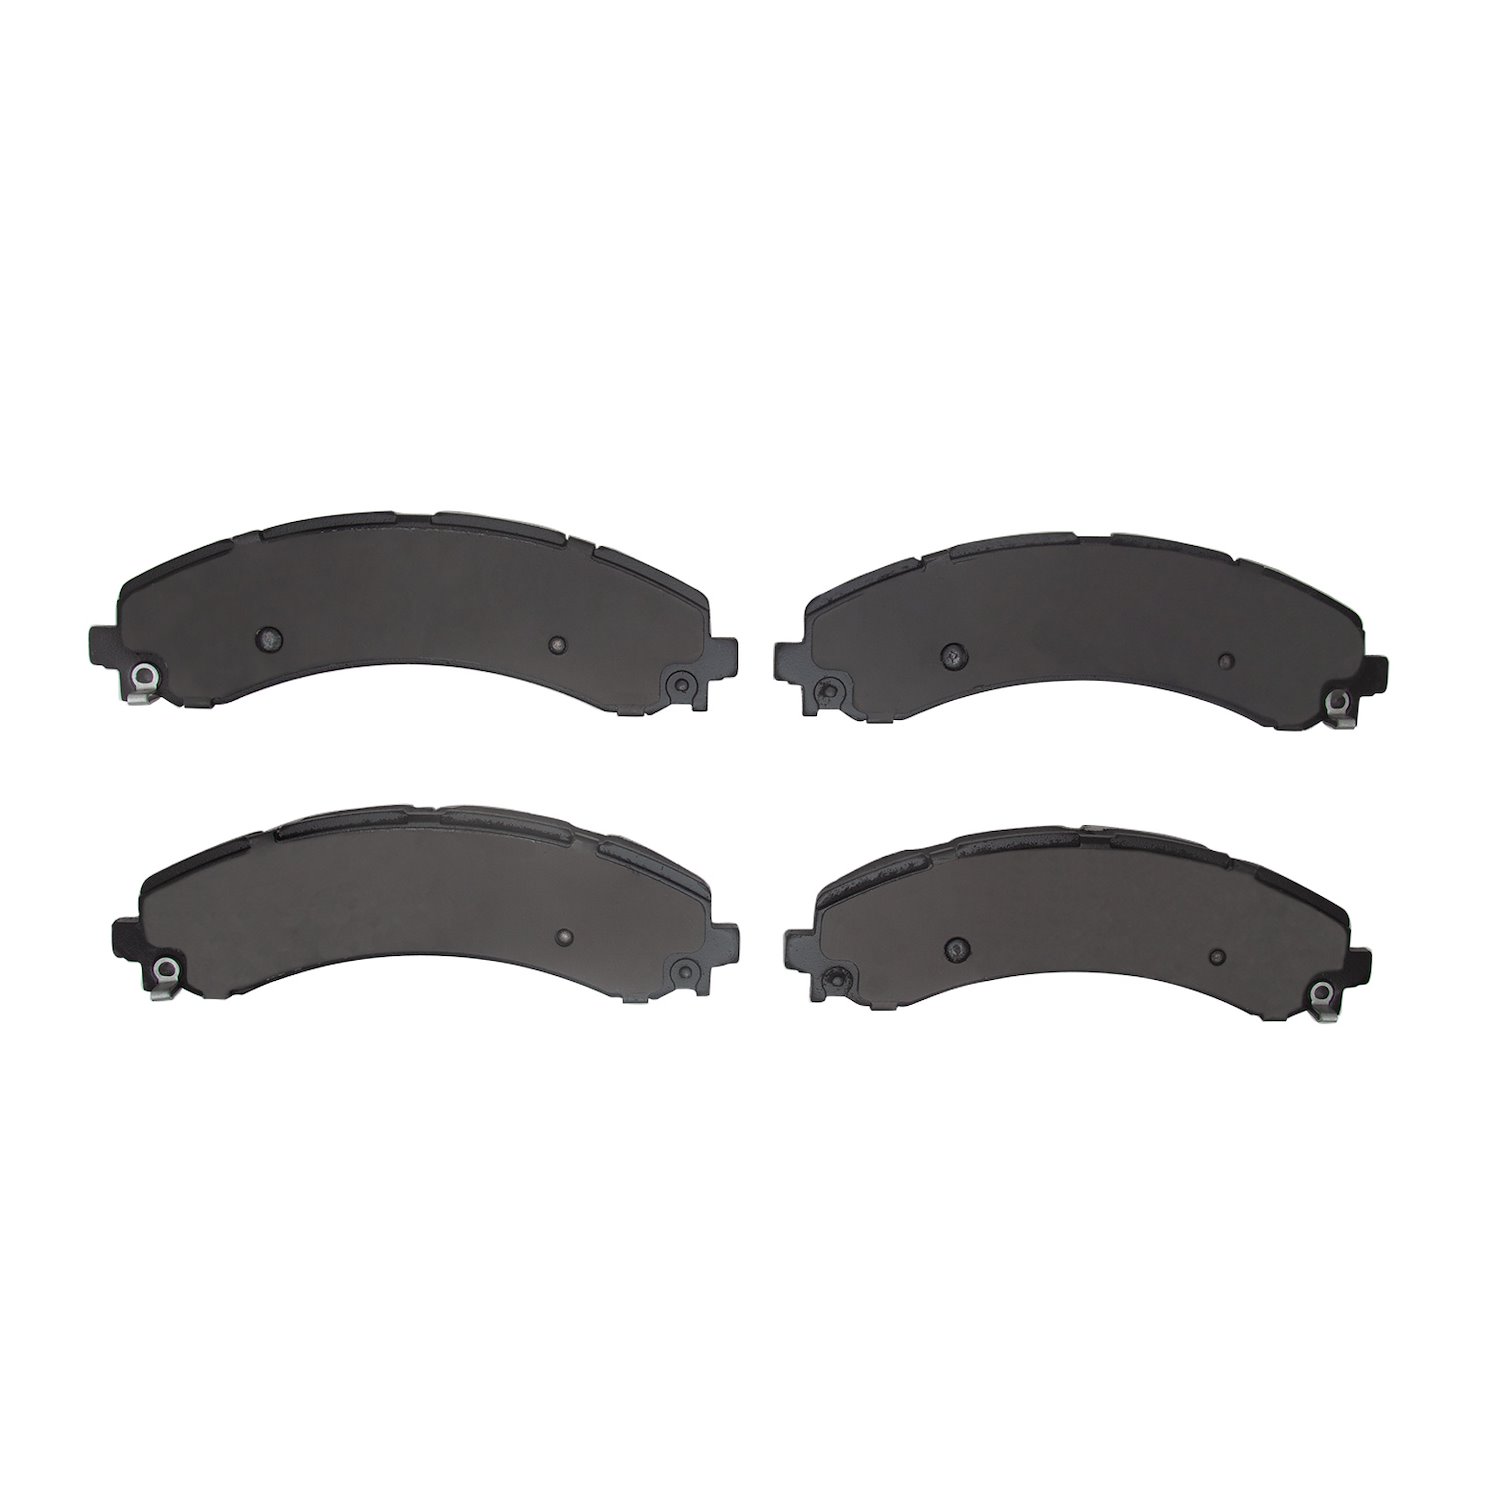 1400-2224-00 Ultimate-Duty Brake Pads Kit, Fits Select Mopar, Position: Rear